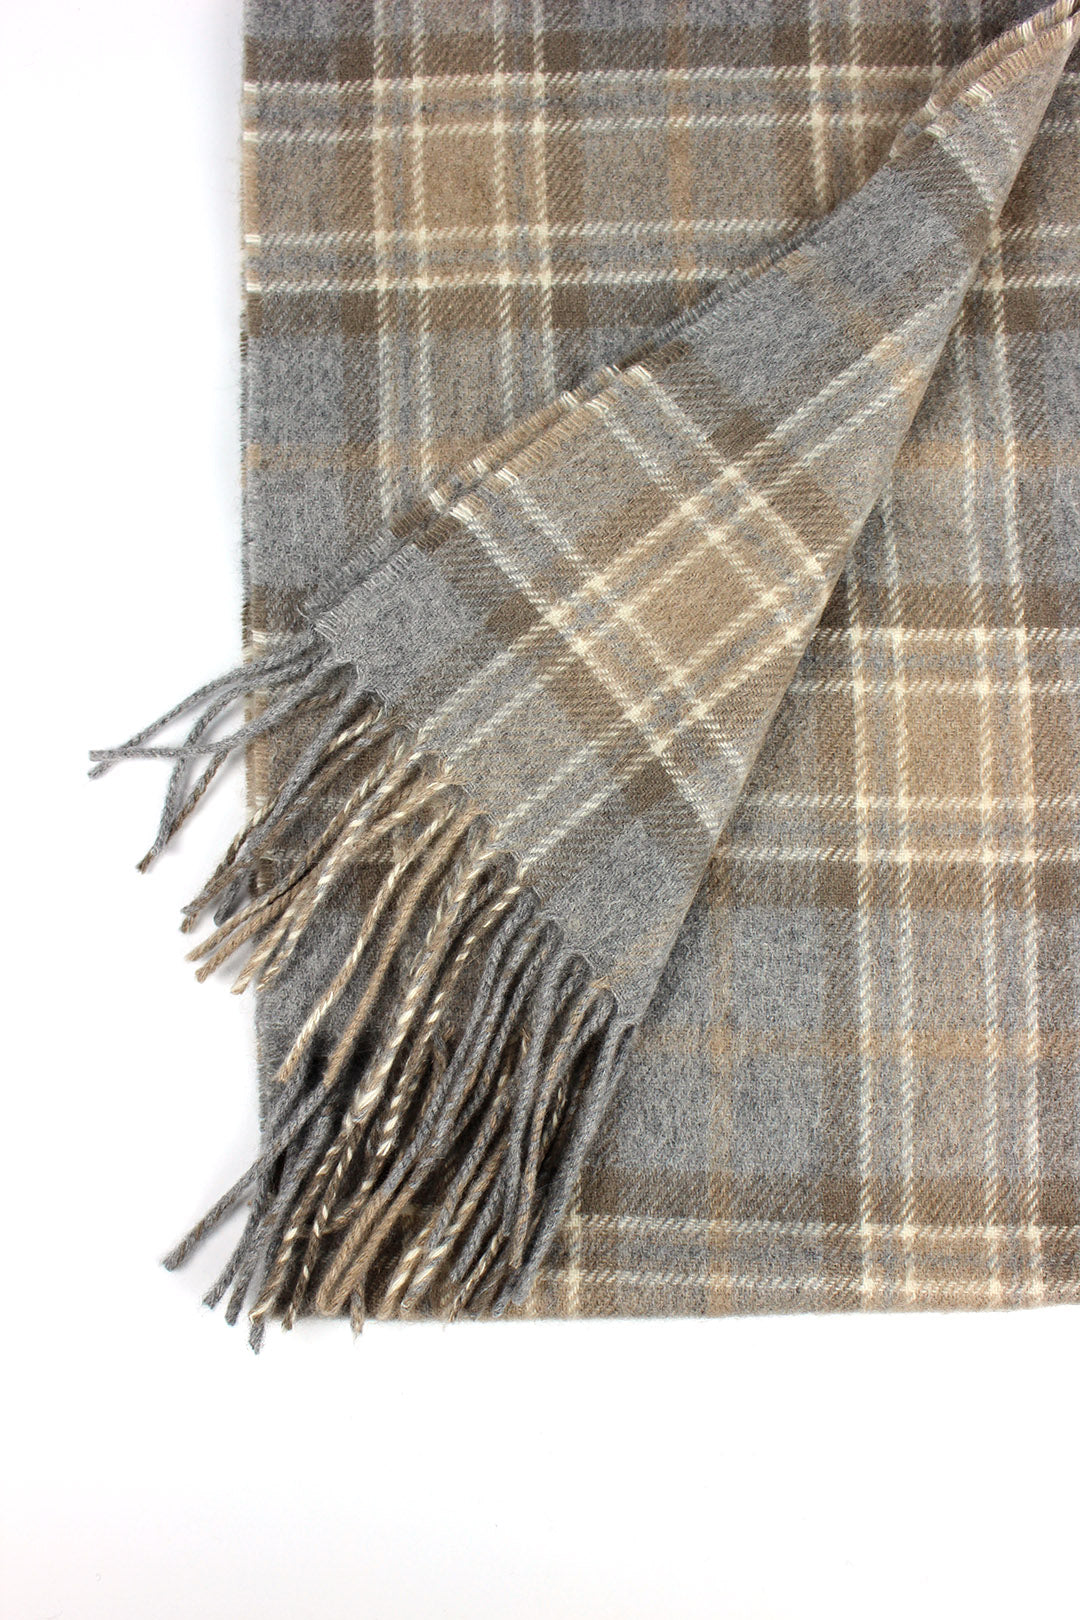 Kinalba Oban Scarf in MacKellar Tartan. Scottish Textiles Showcase.